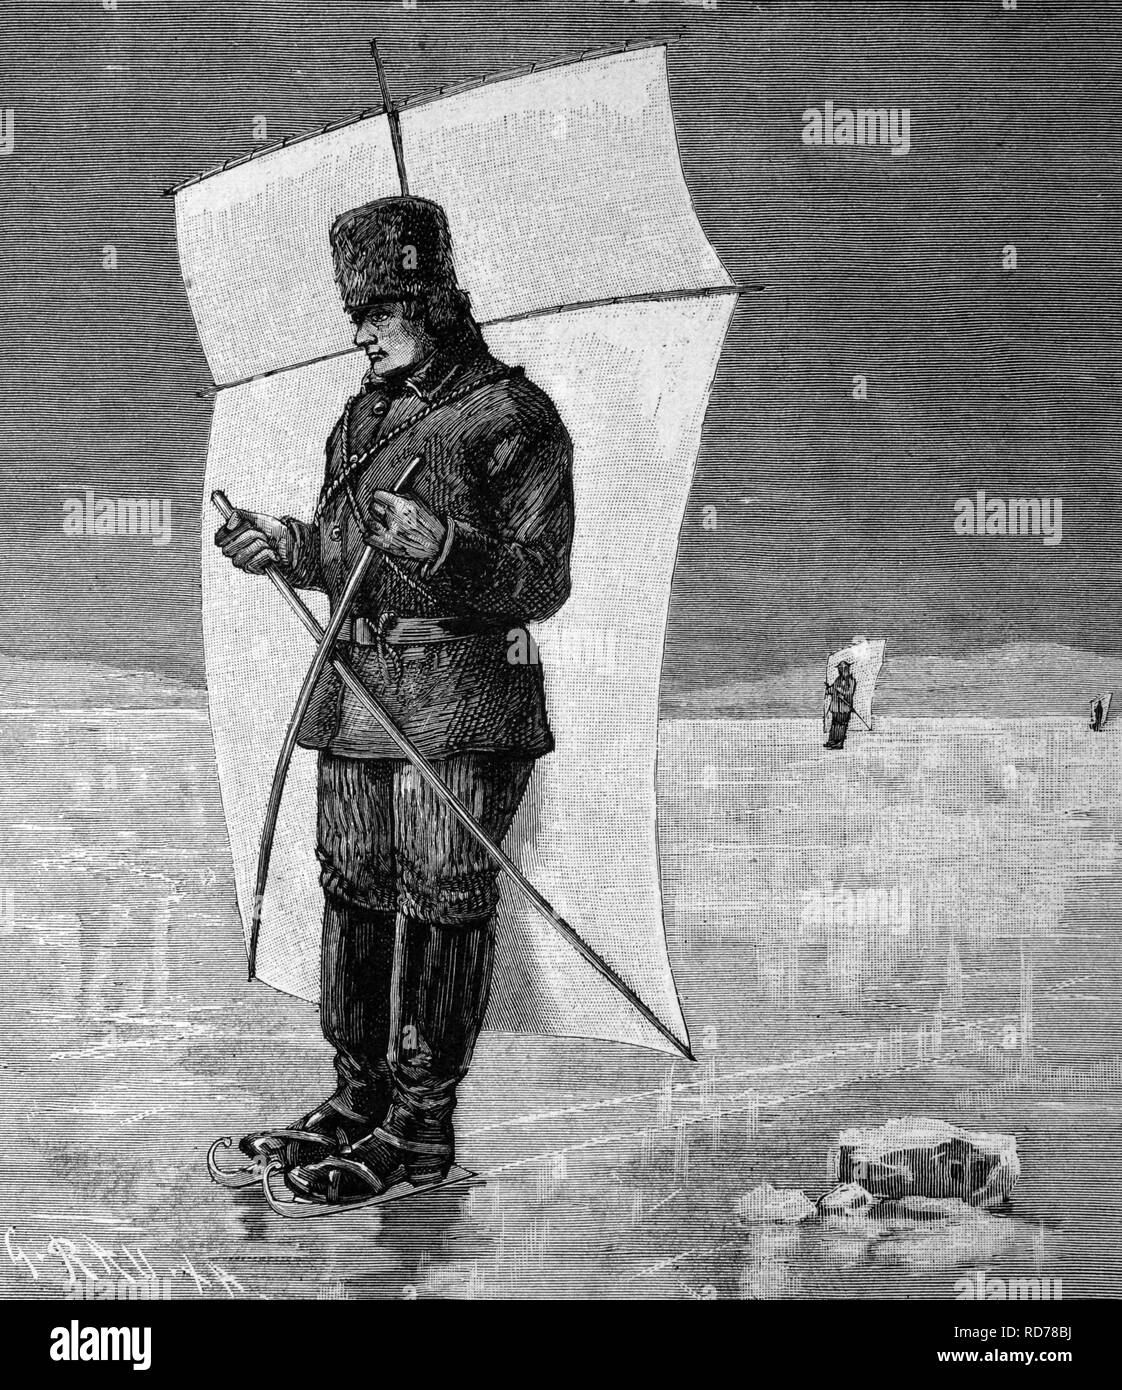 Skat sailing on the frozen Hudson River, North America, historical illustration, circa 1886 Stock Photo